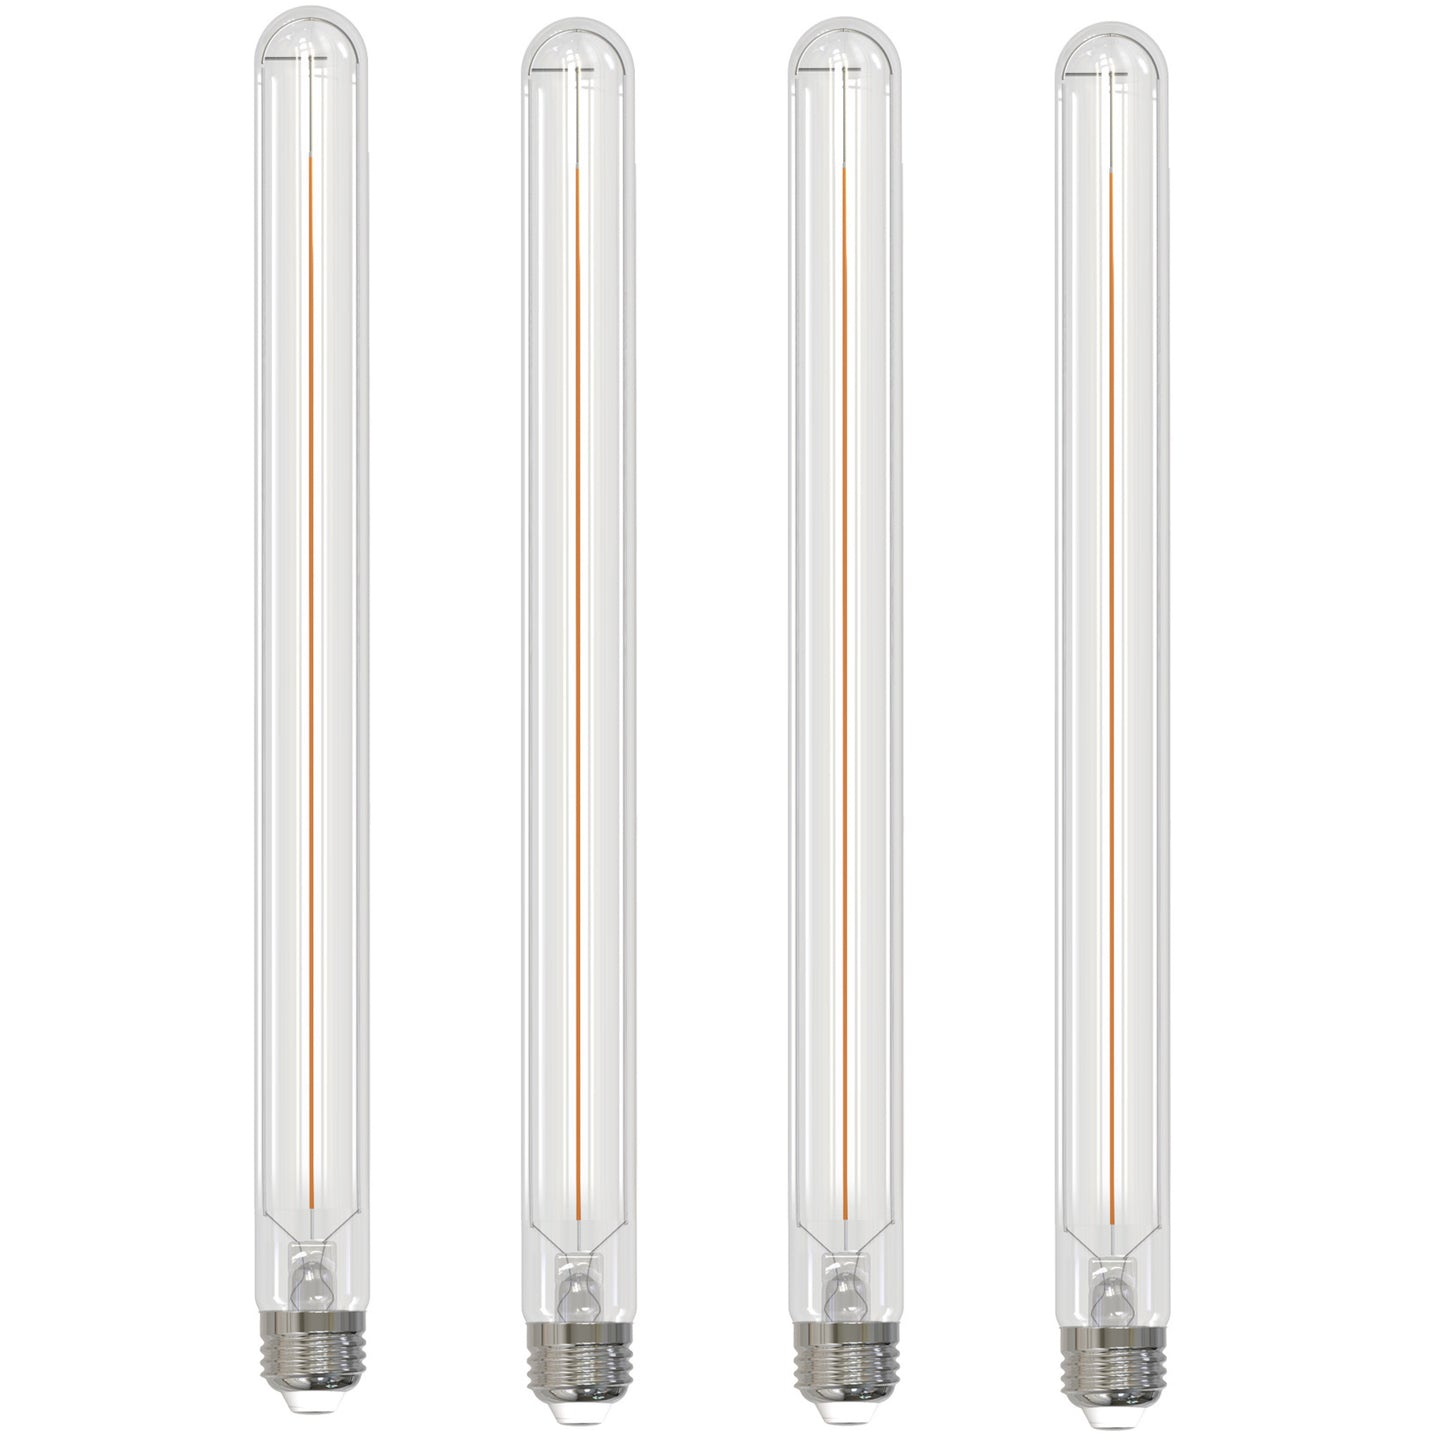 776720 - Filaments Dimmable Clear Glass 15" T9 LED Light Bulb - 5 Watt - 2700K - 4 Pack